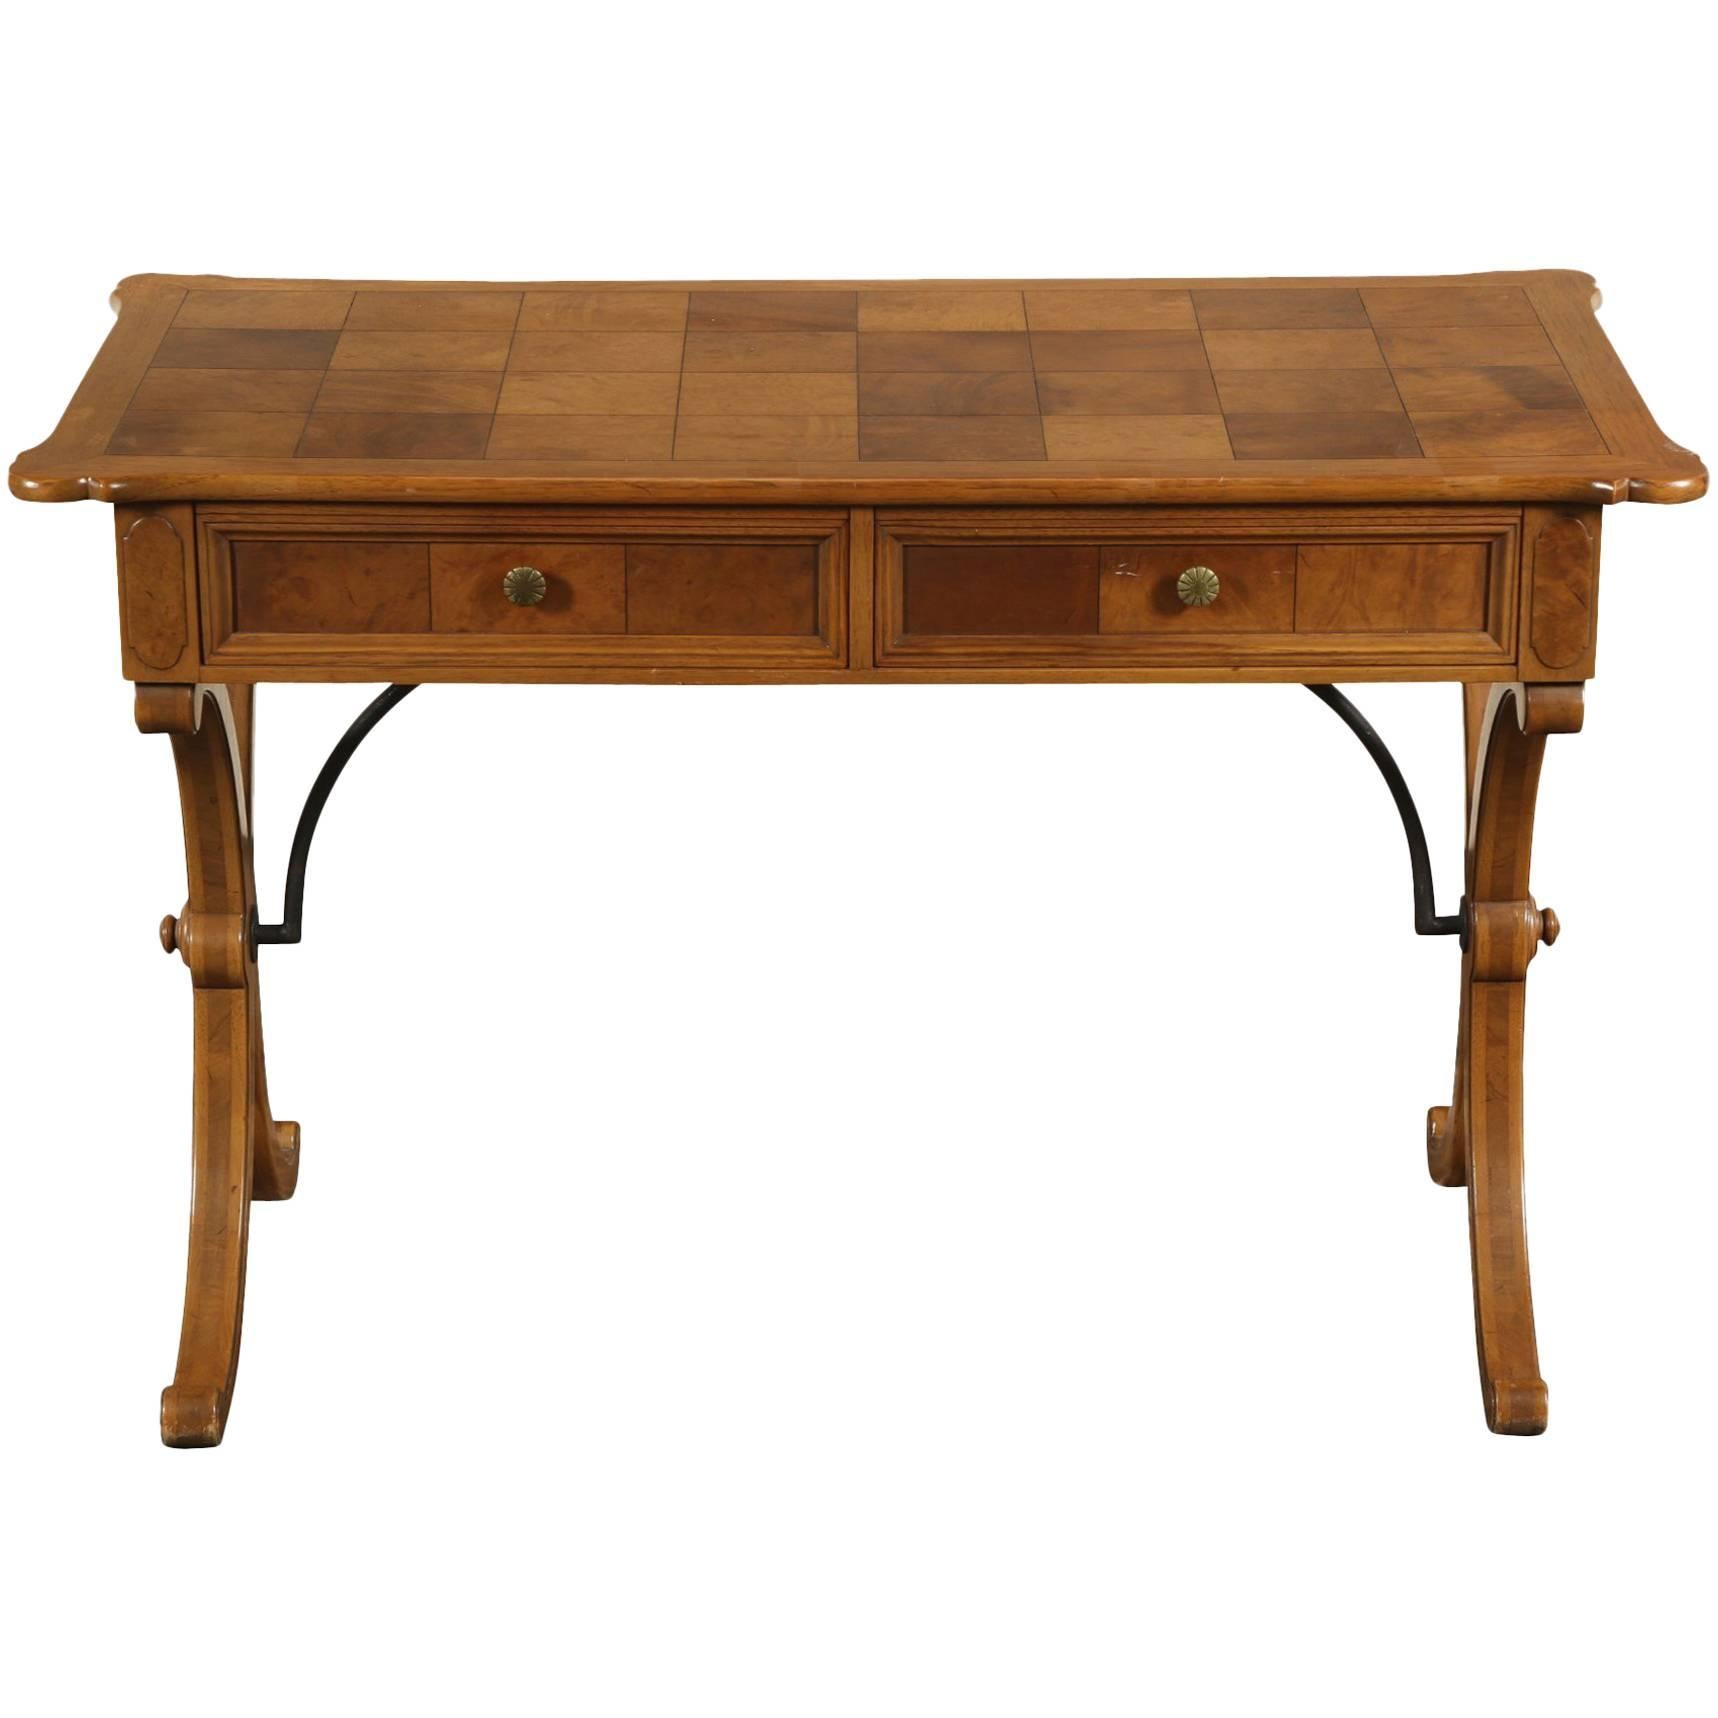 Tomlinson Italian Style Desk with Parquetry Burled Veneer Top